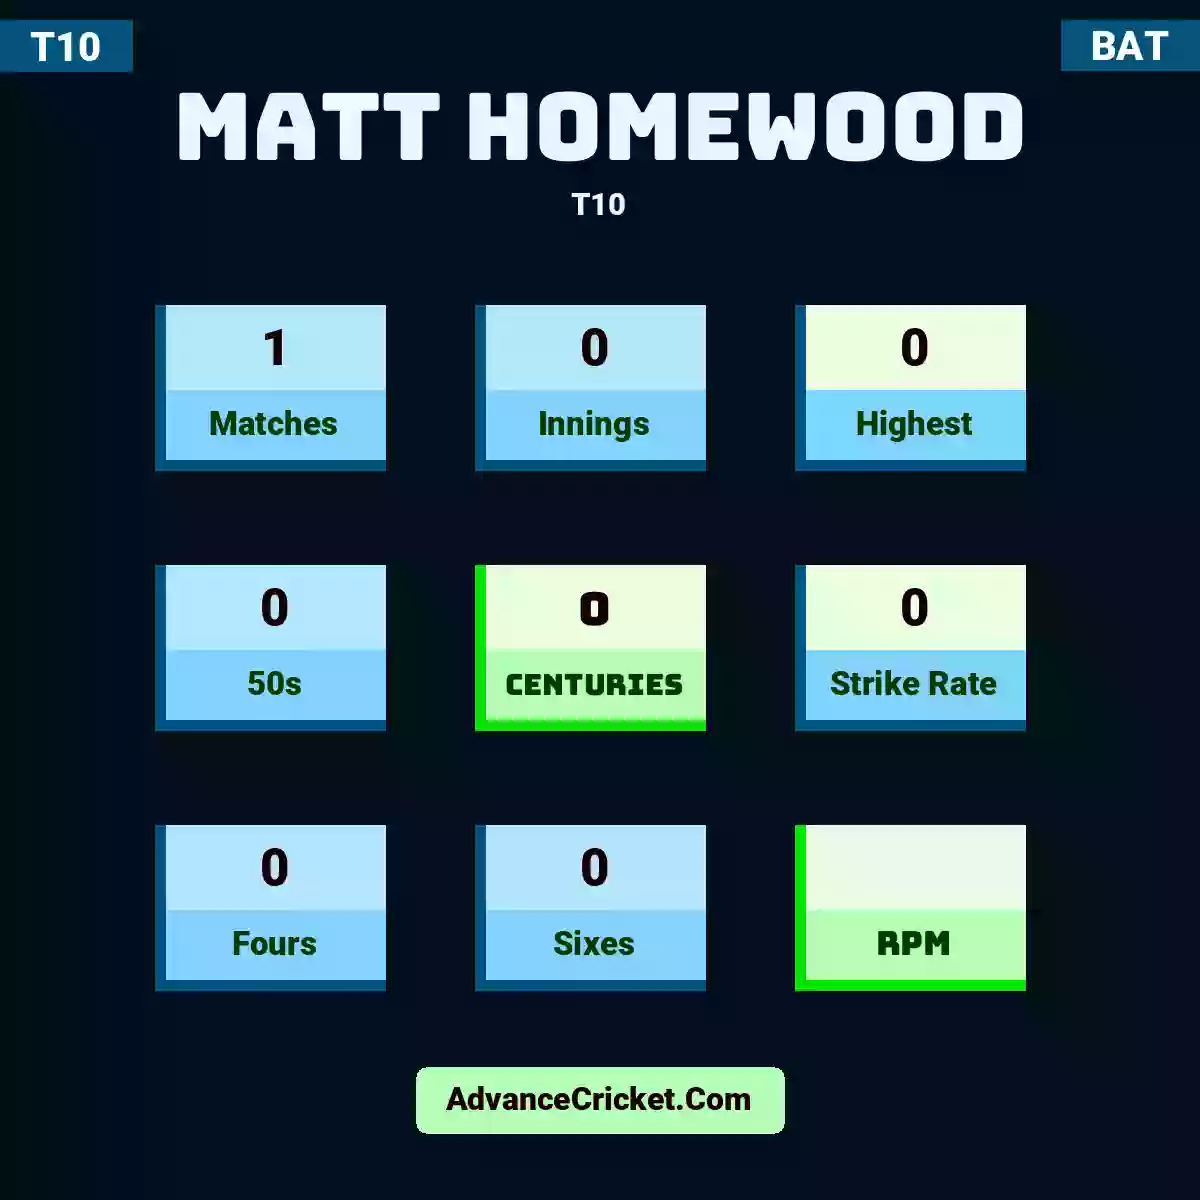 Matt Homewood T10 , Matt Homewood played 1 matches, scored 0 runs as highest, 0 half-centuries, and 0 centuries, with a strike rate of 0. M.Homewood hit 0 fours and 0 sixes.